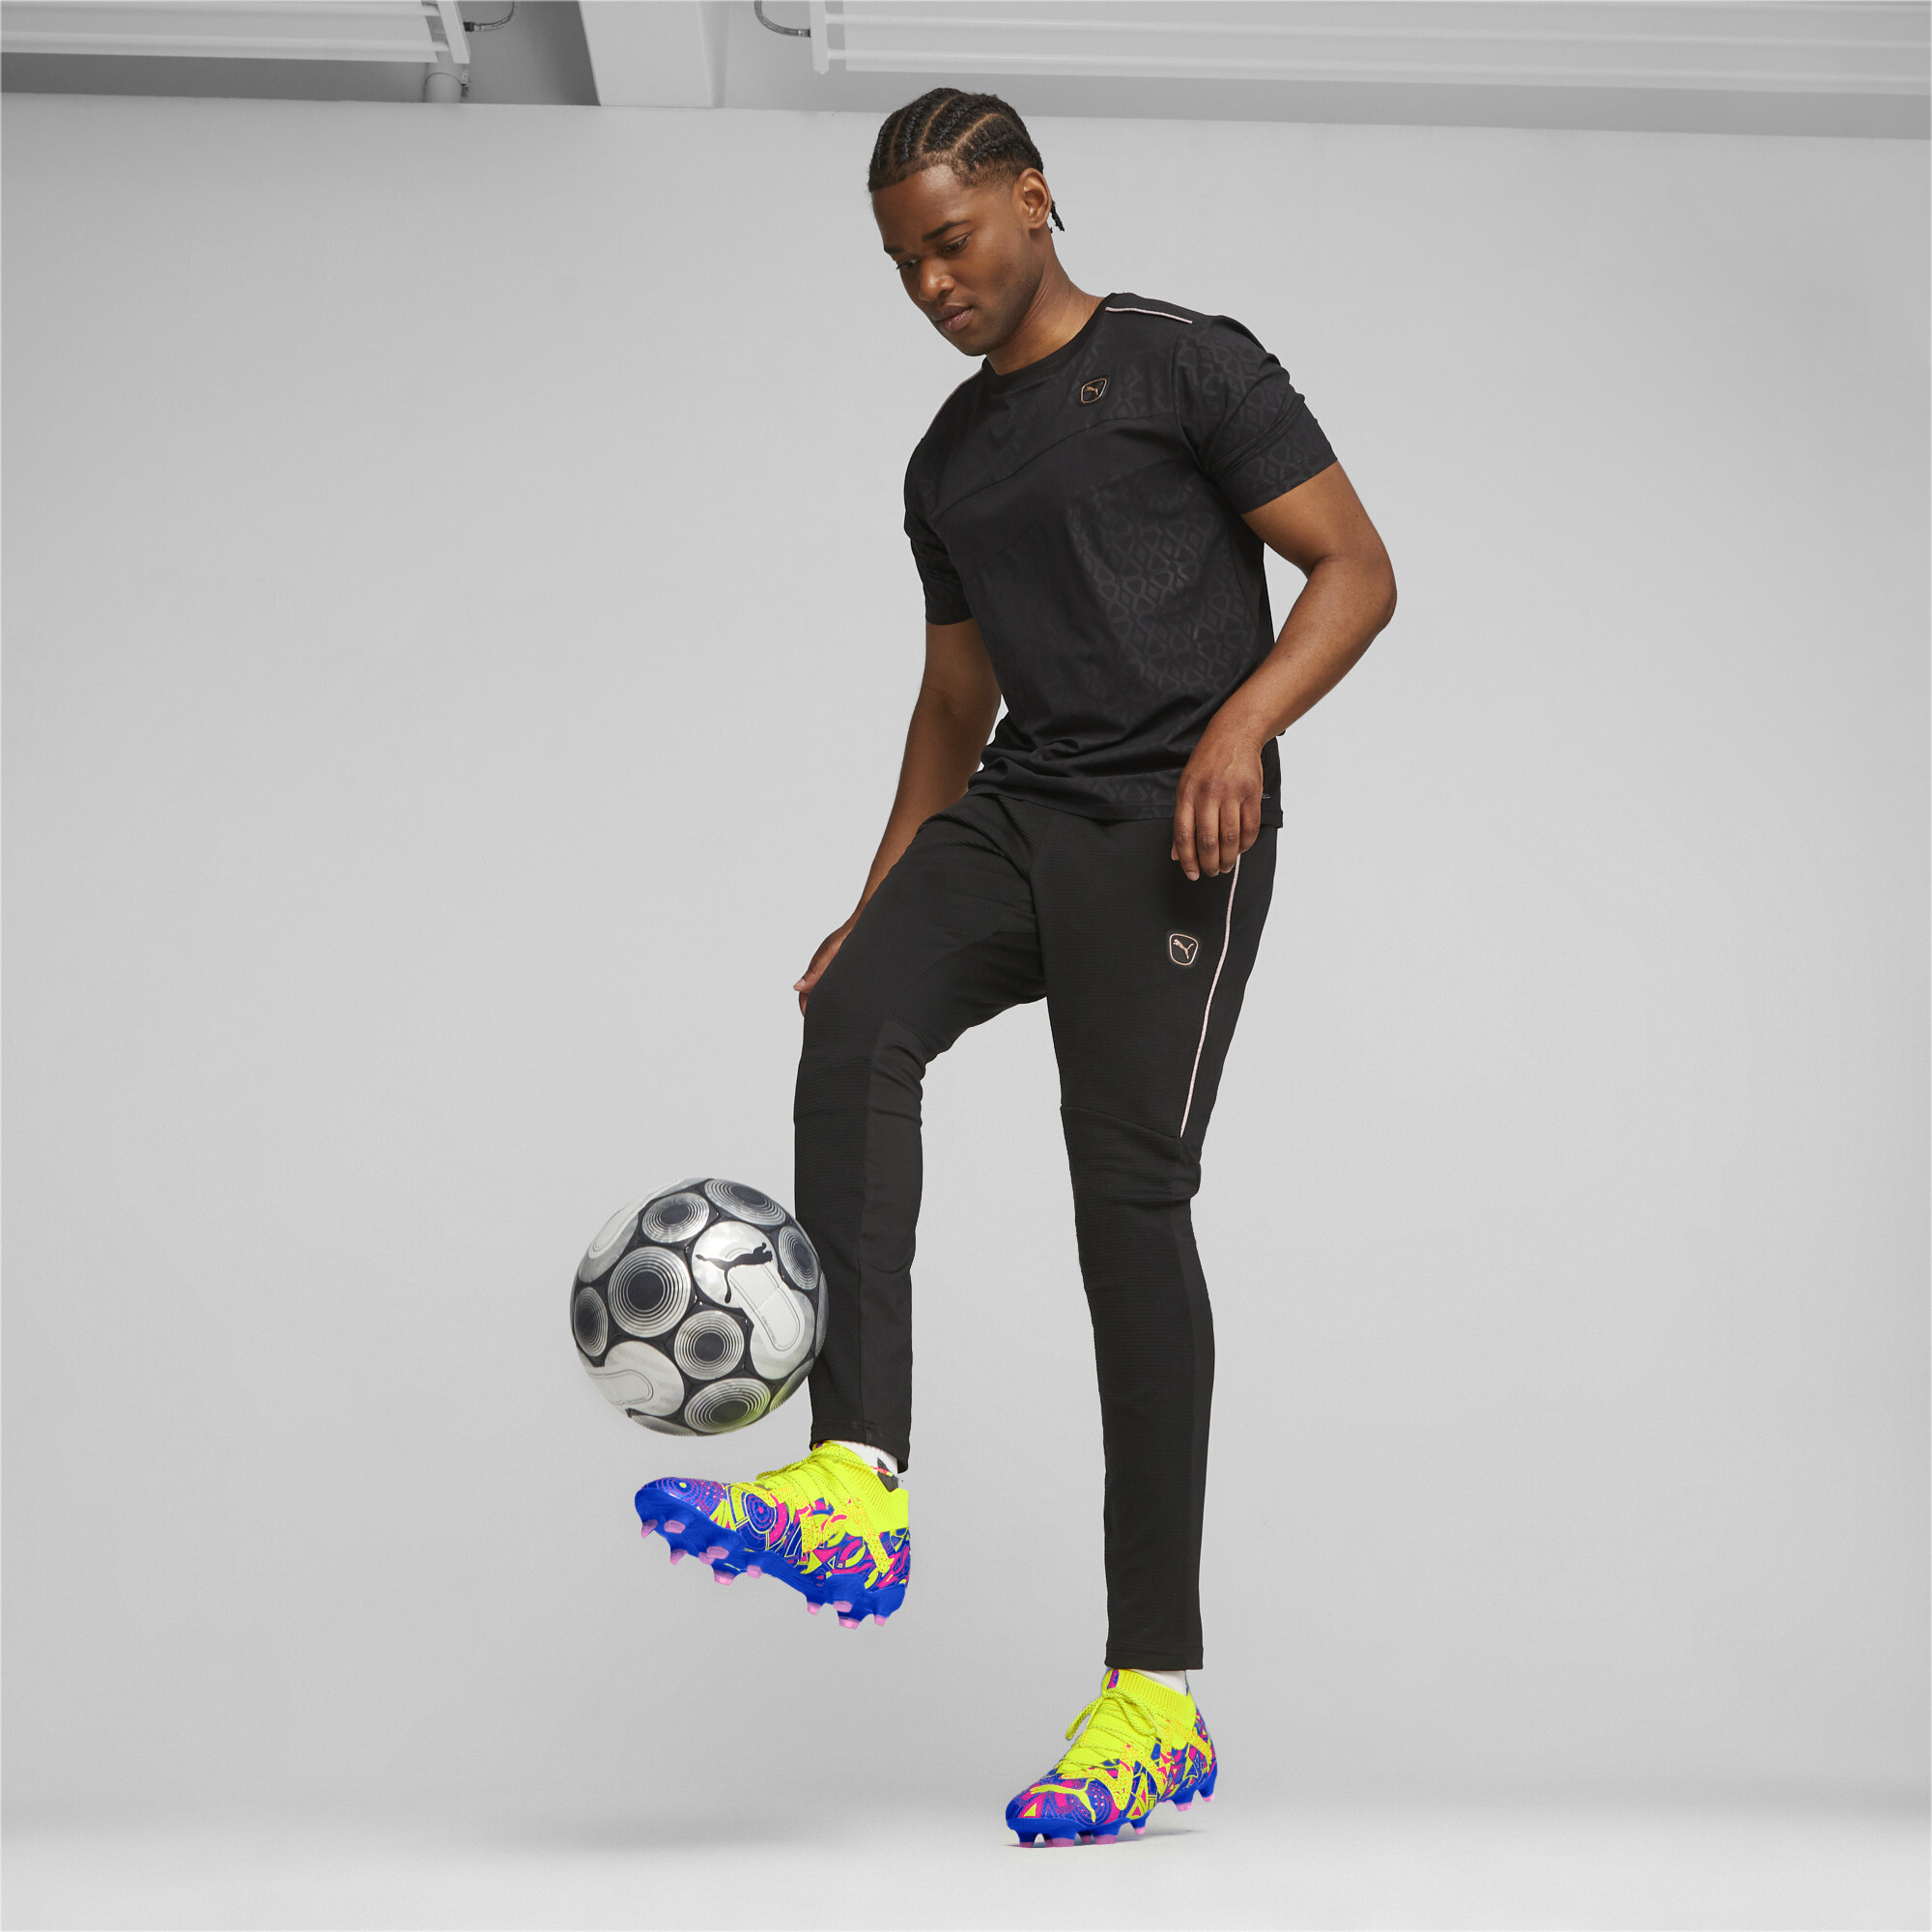 Men's Puma FUTURE ULTIMATE ENERGY FG/AG Football Boots, Blue, Size 36, Shoes